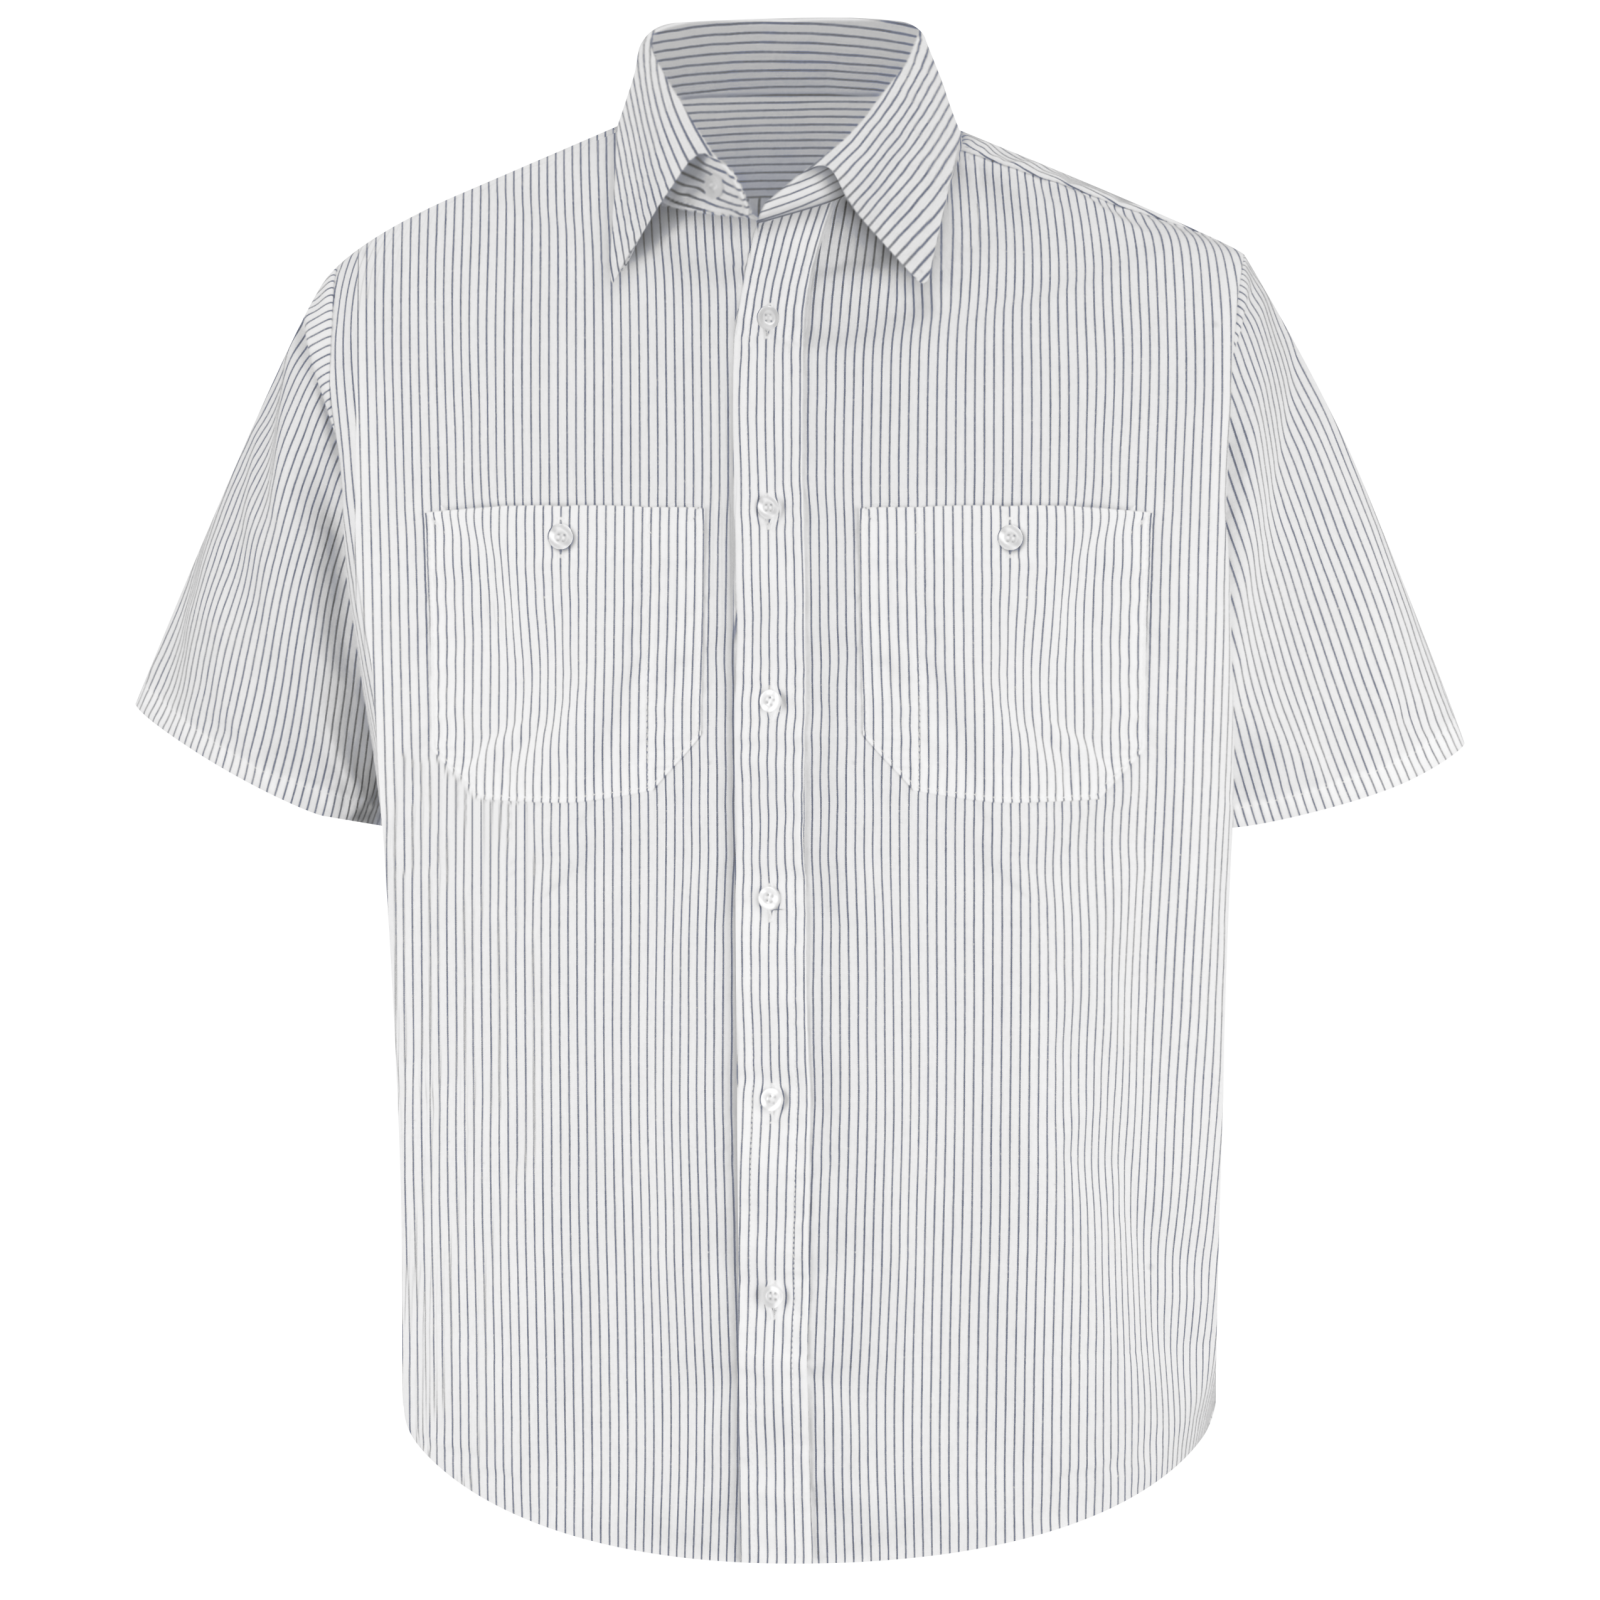 White Short Sleeve Shirt on Sale, 54% OFF | www.ingeniovirtual.com